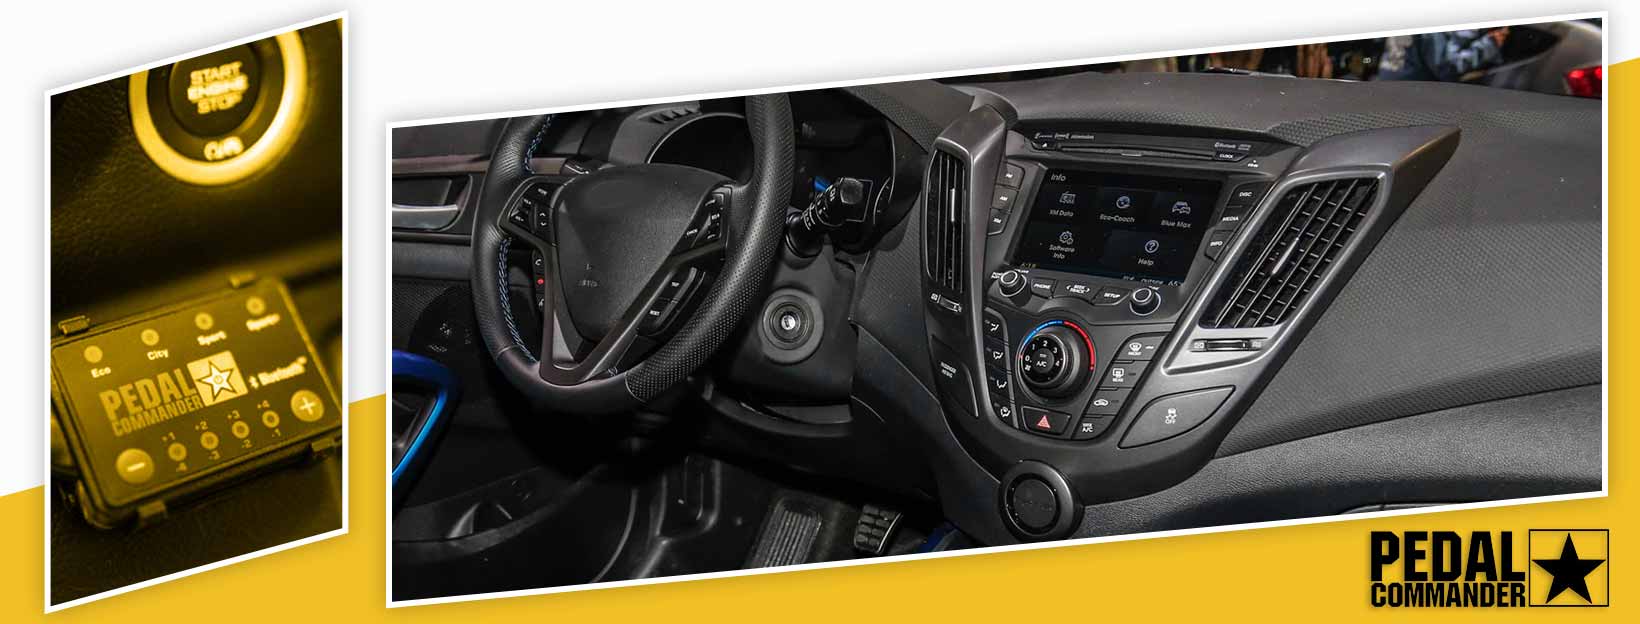 Pedal Commander for Hyundai Veloster N - interior